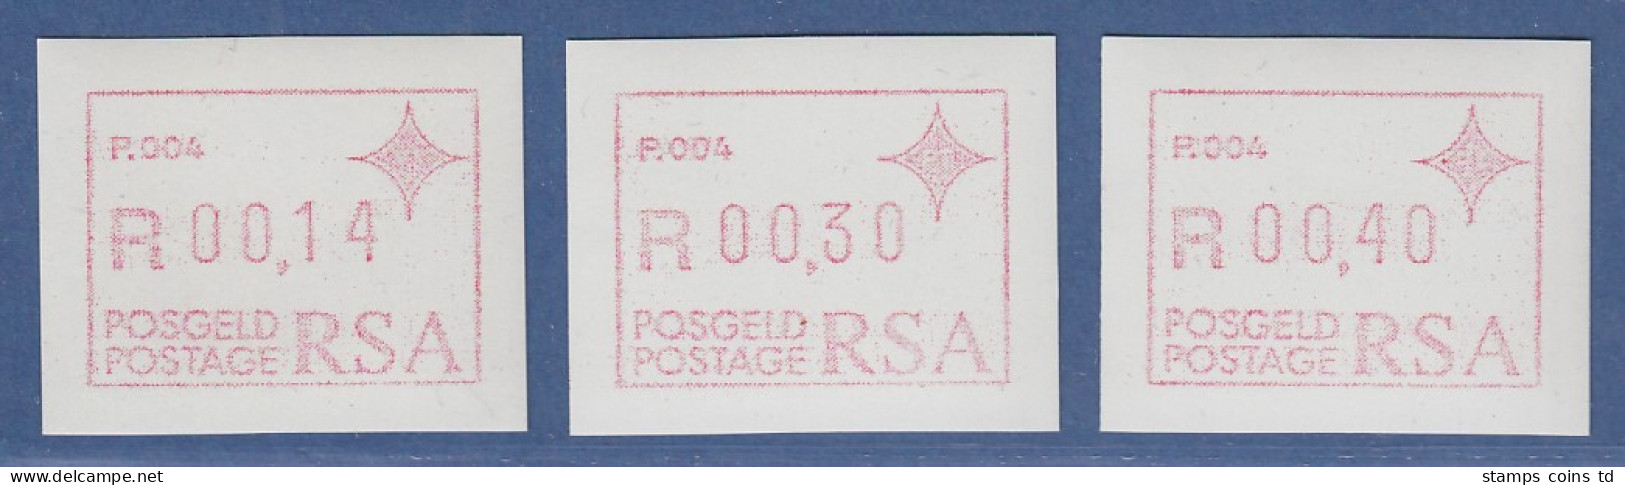 RSA Südafrika FRAMA-ATM  Aut.-Nr. P.004 Satz 14-30-40 ** (VS) - Vignettes D'affranchissement (Frama)